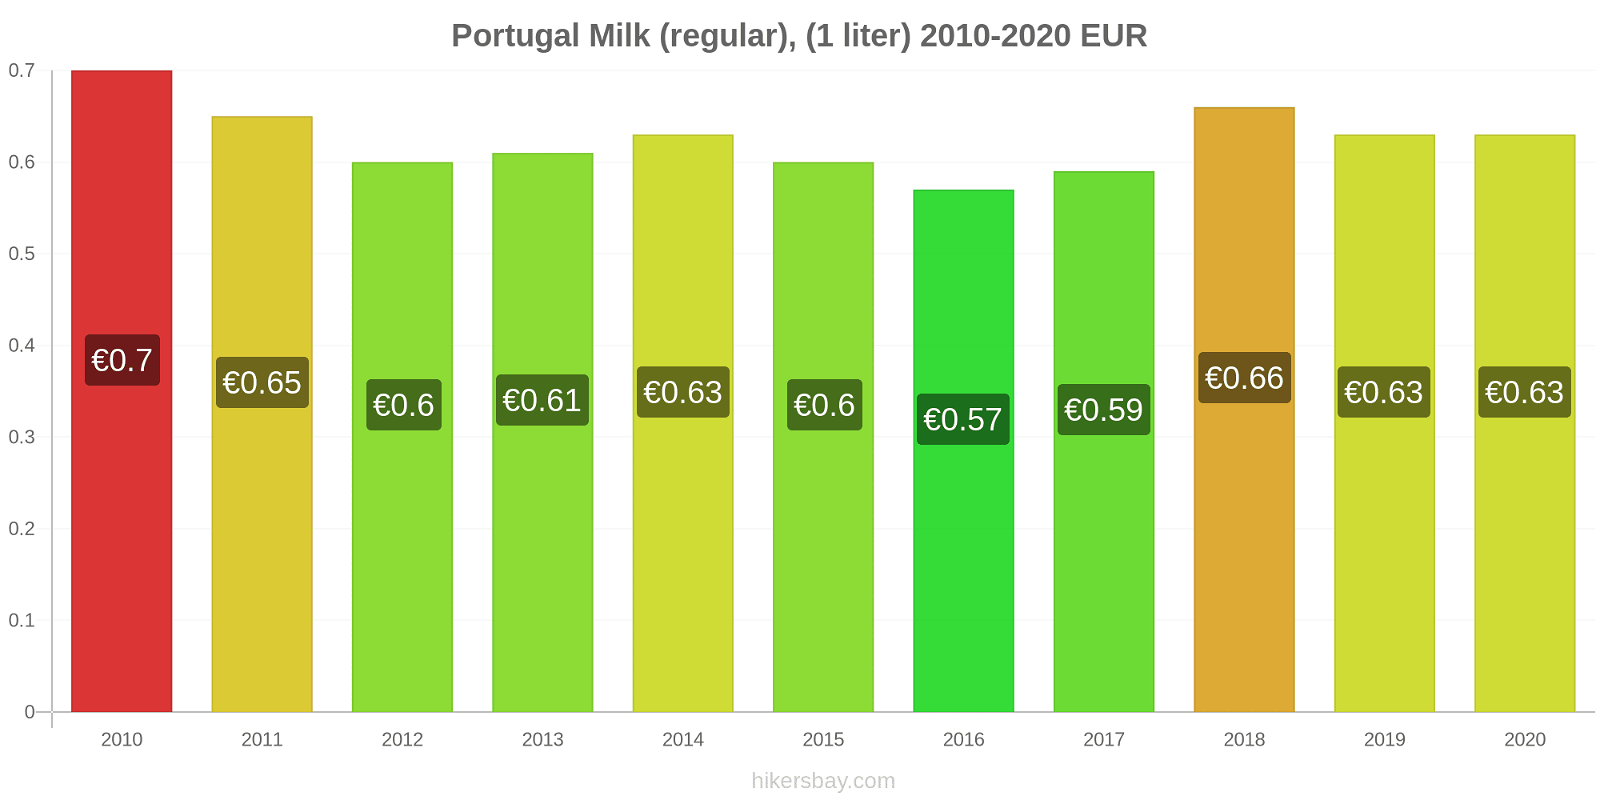 Portugal price changes Milk (regular), (1 liter) hikersbay.com